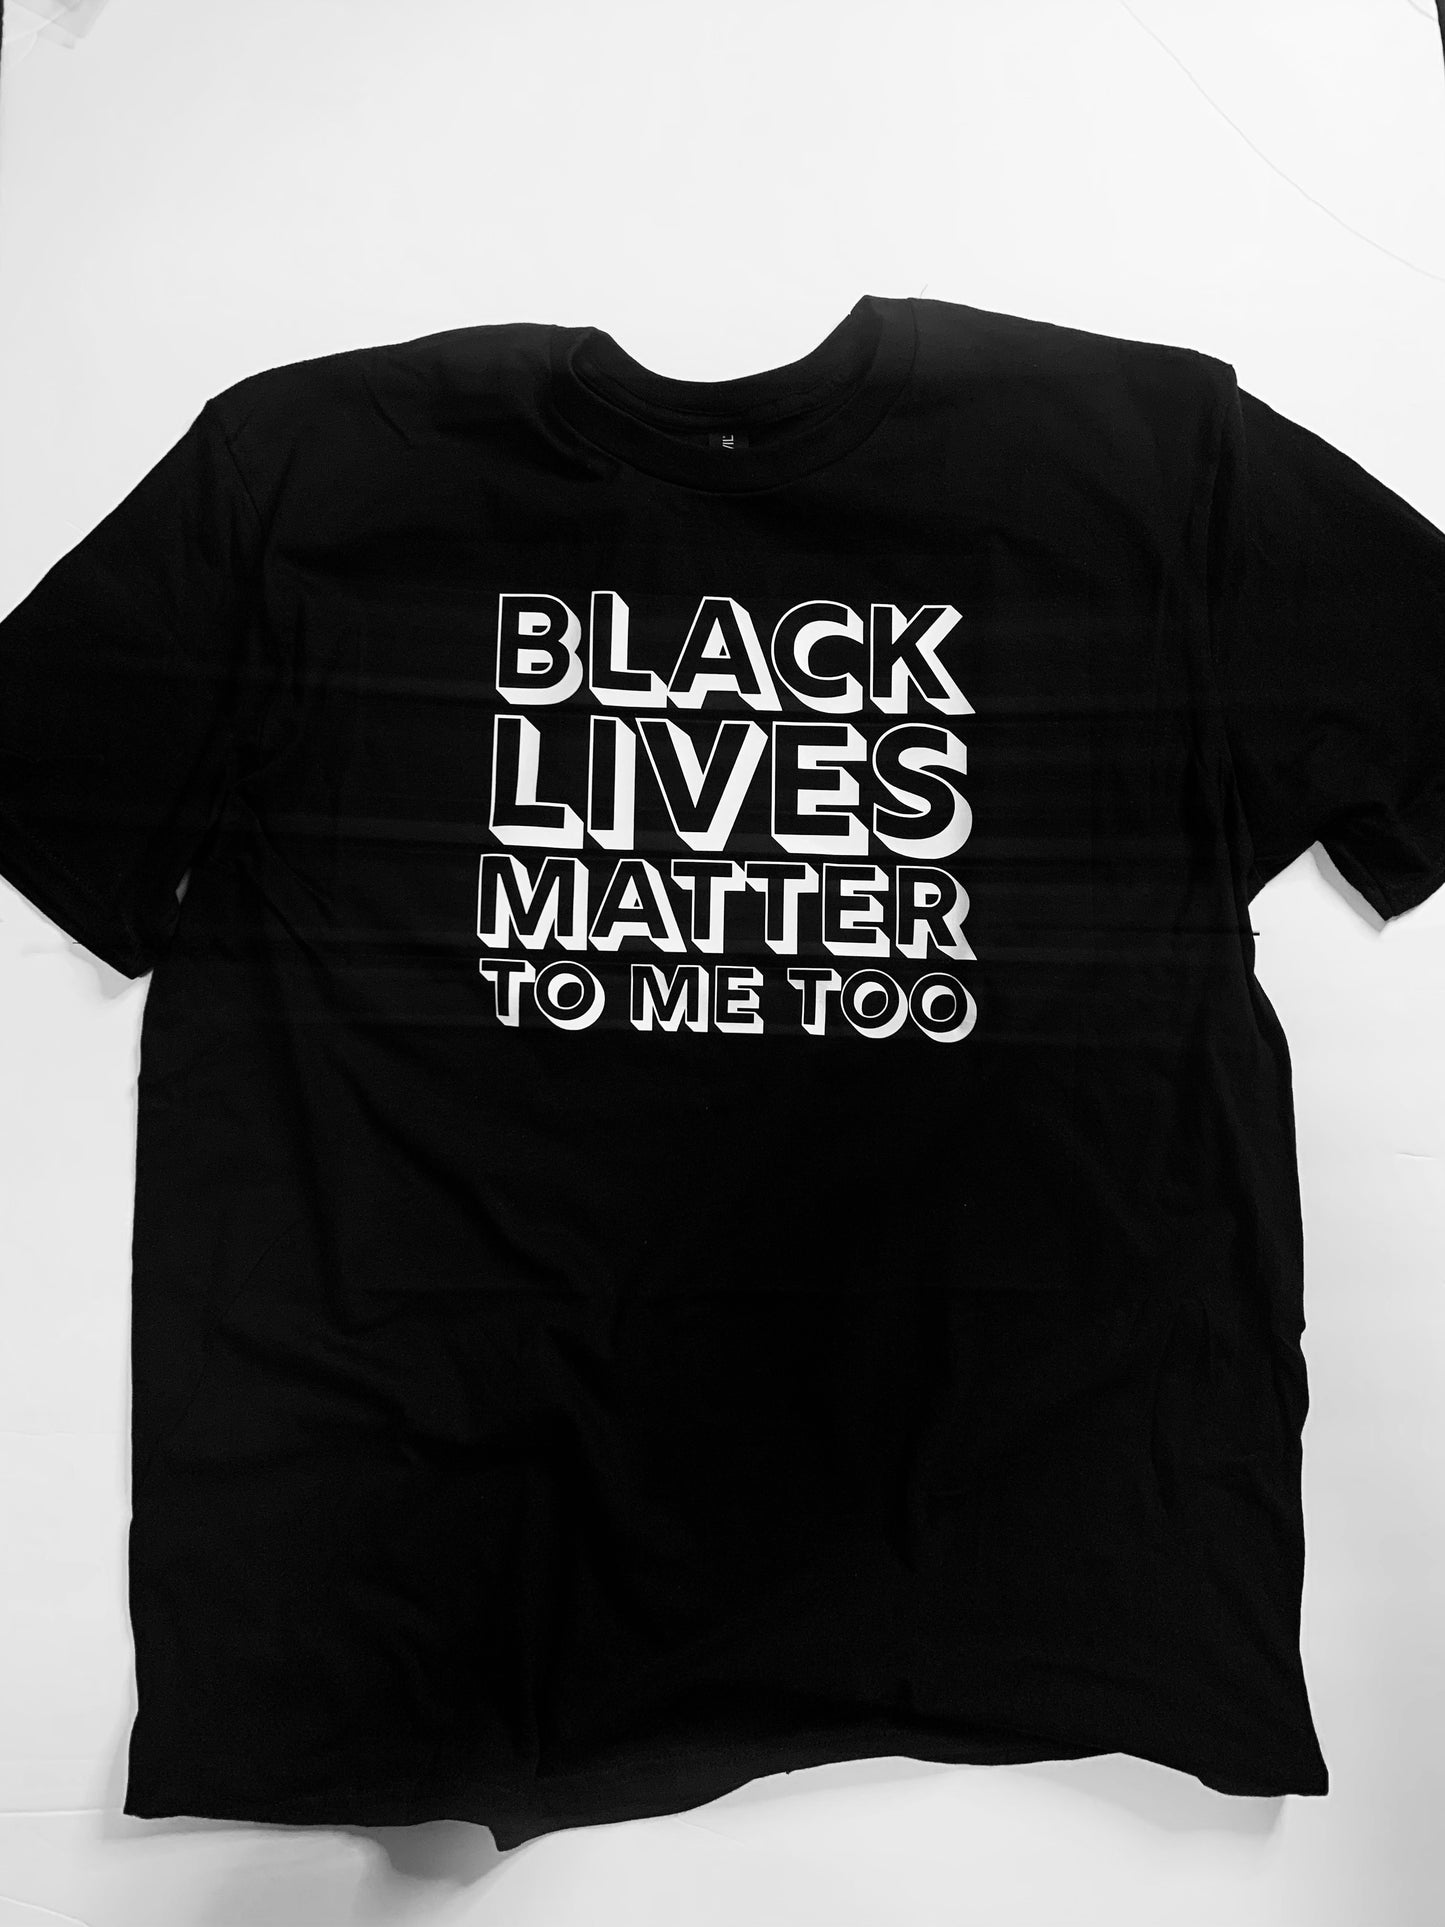 BLACK LIVES MATTER TO ME TOO!